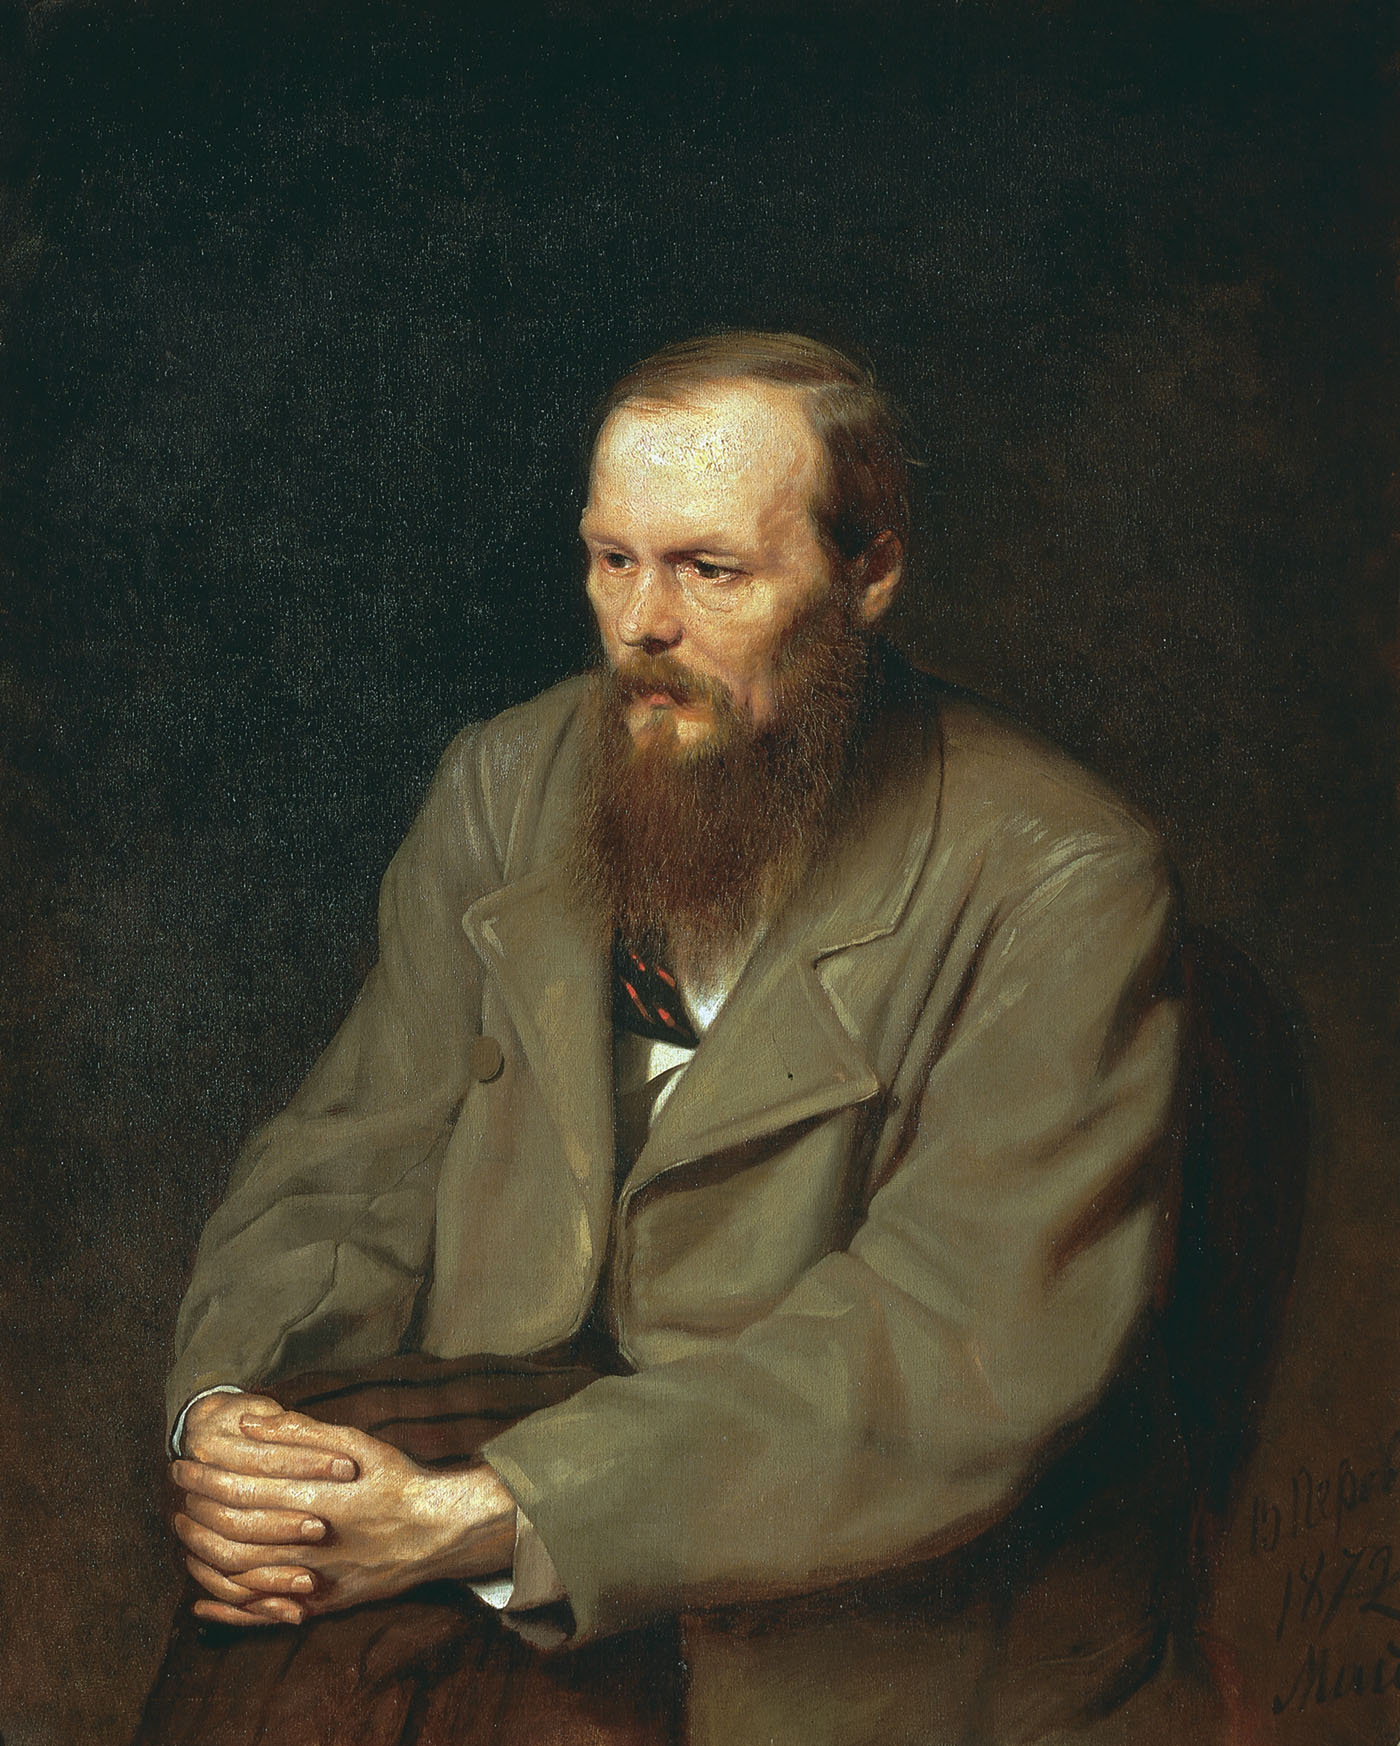 A portrait of a bearded man.